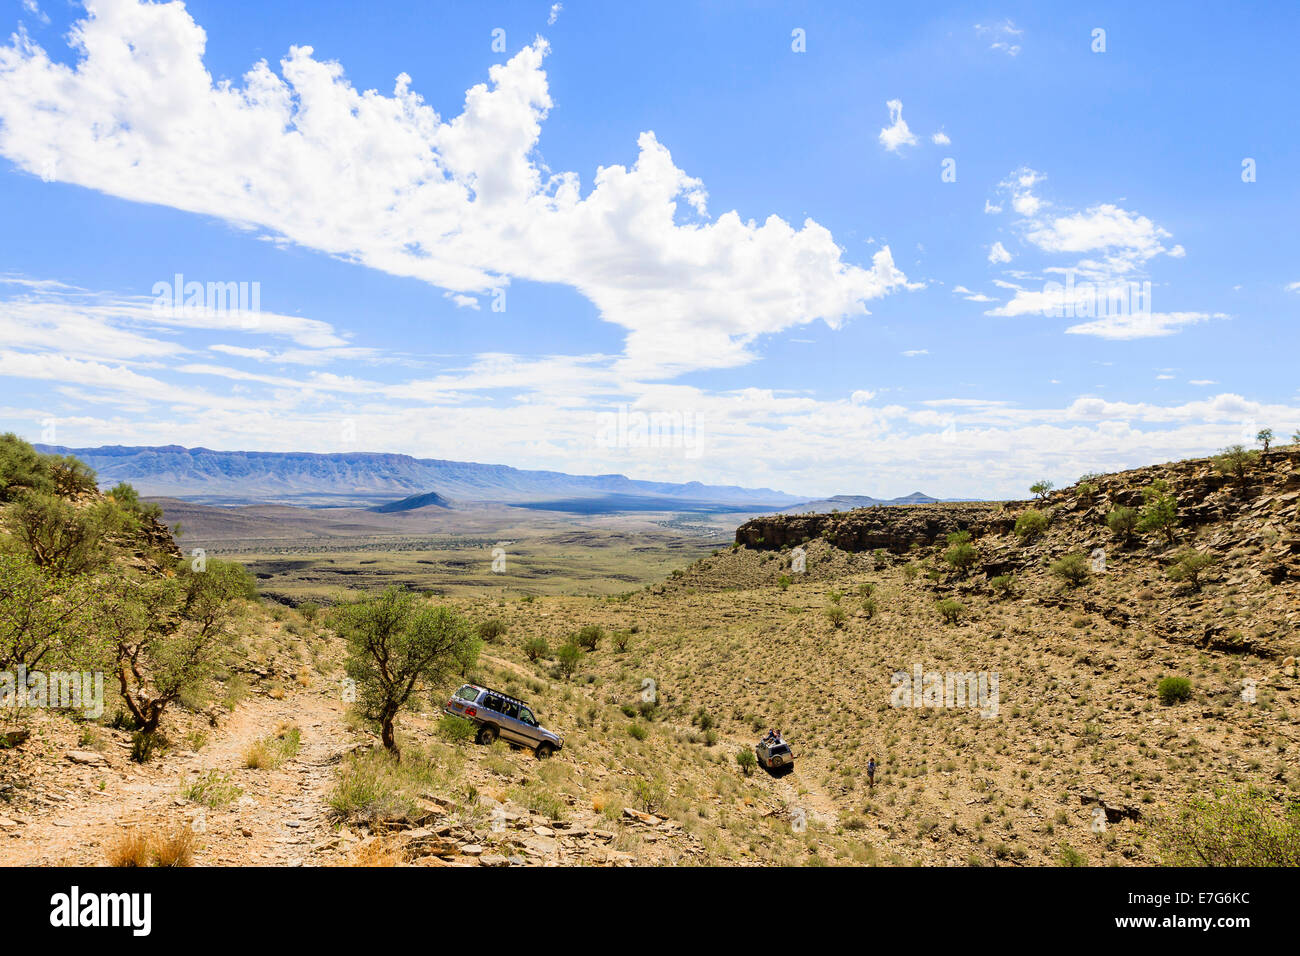 SUV driving through arid landscape, Tsauchab, Namibia Stock Photo